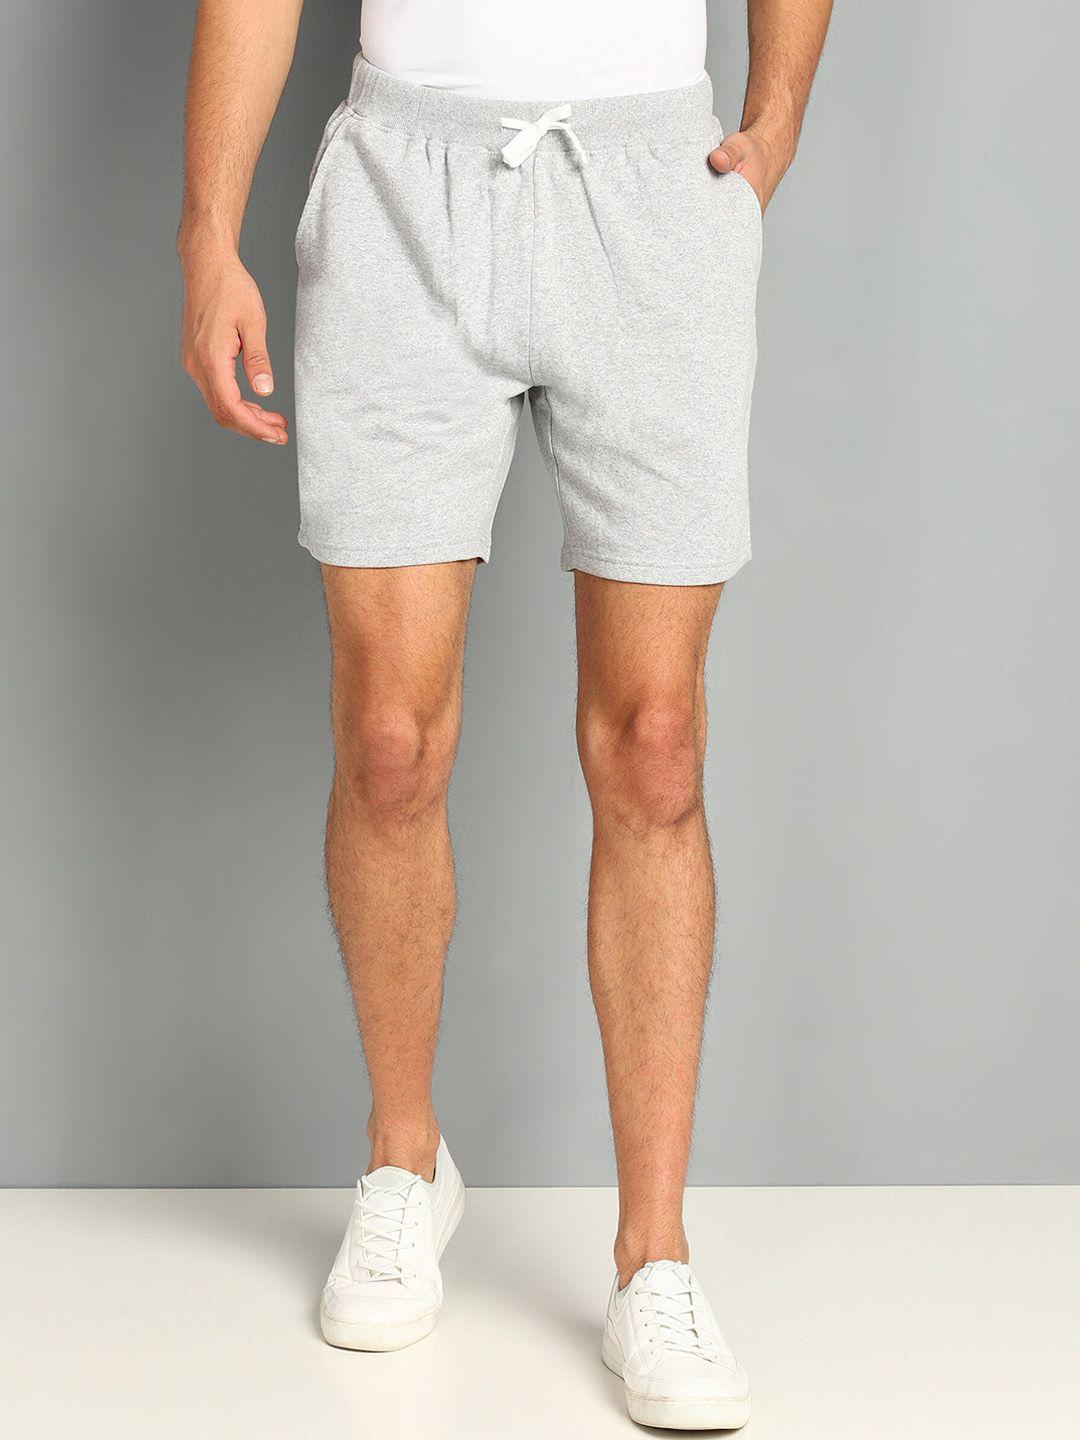 sharktribe men mid rise cotton basic shorts